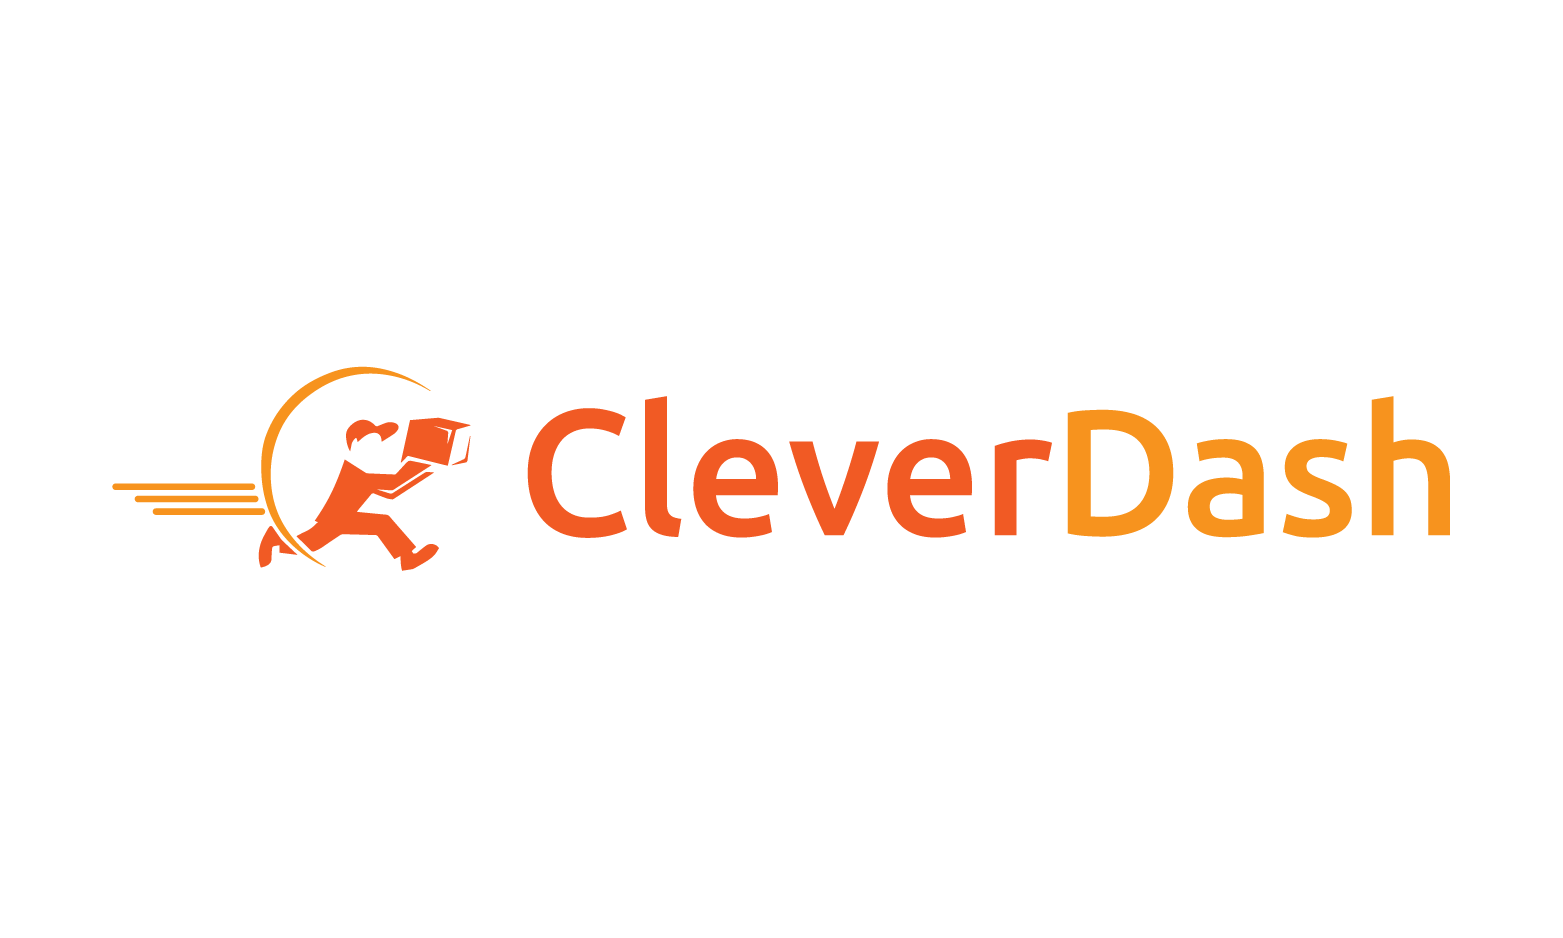 CleverDash.com - Creative brandable domain for sale